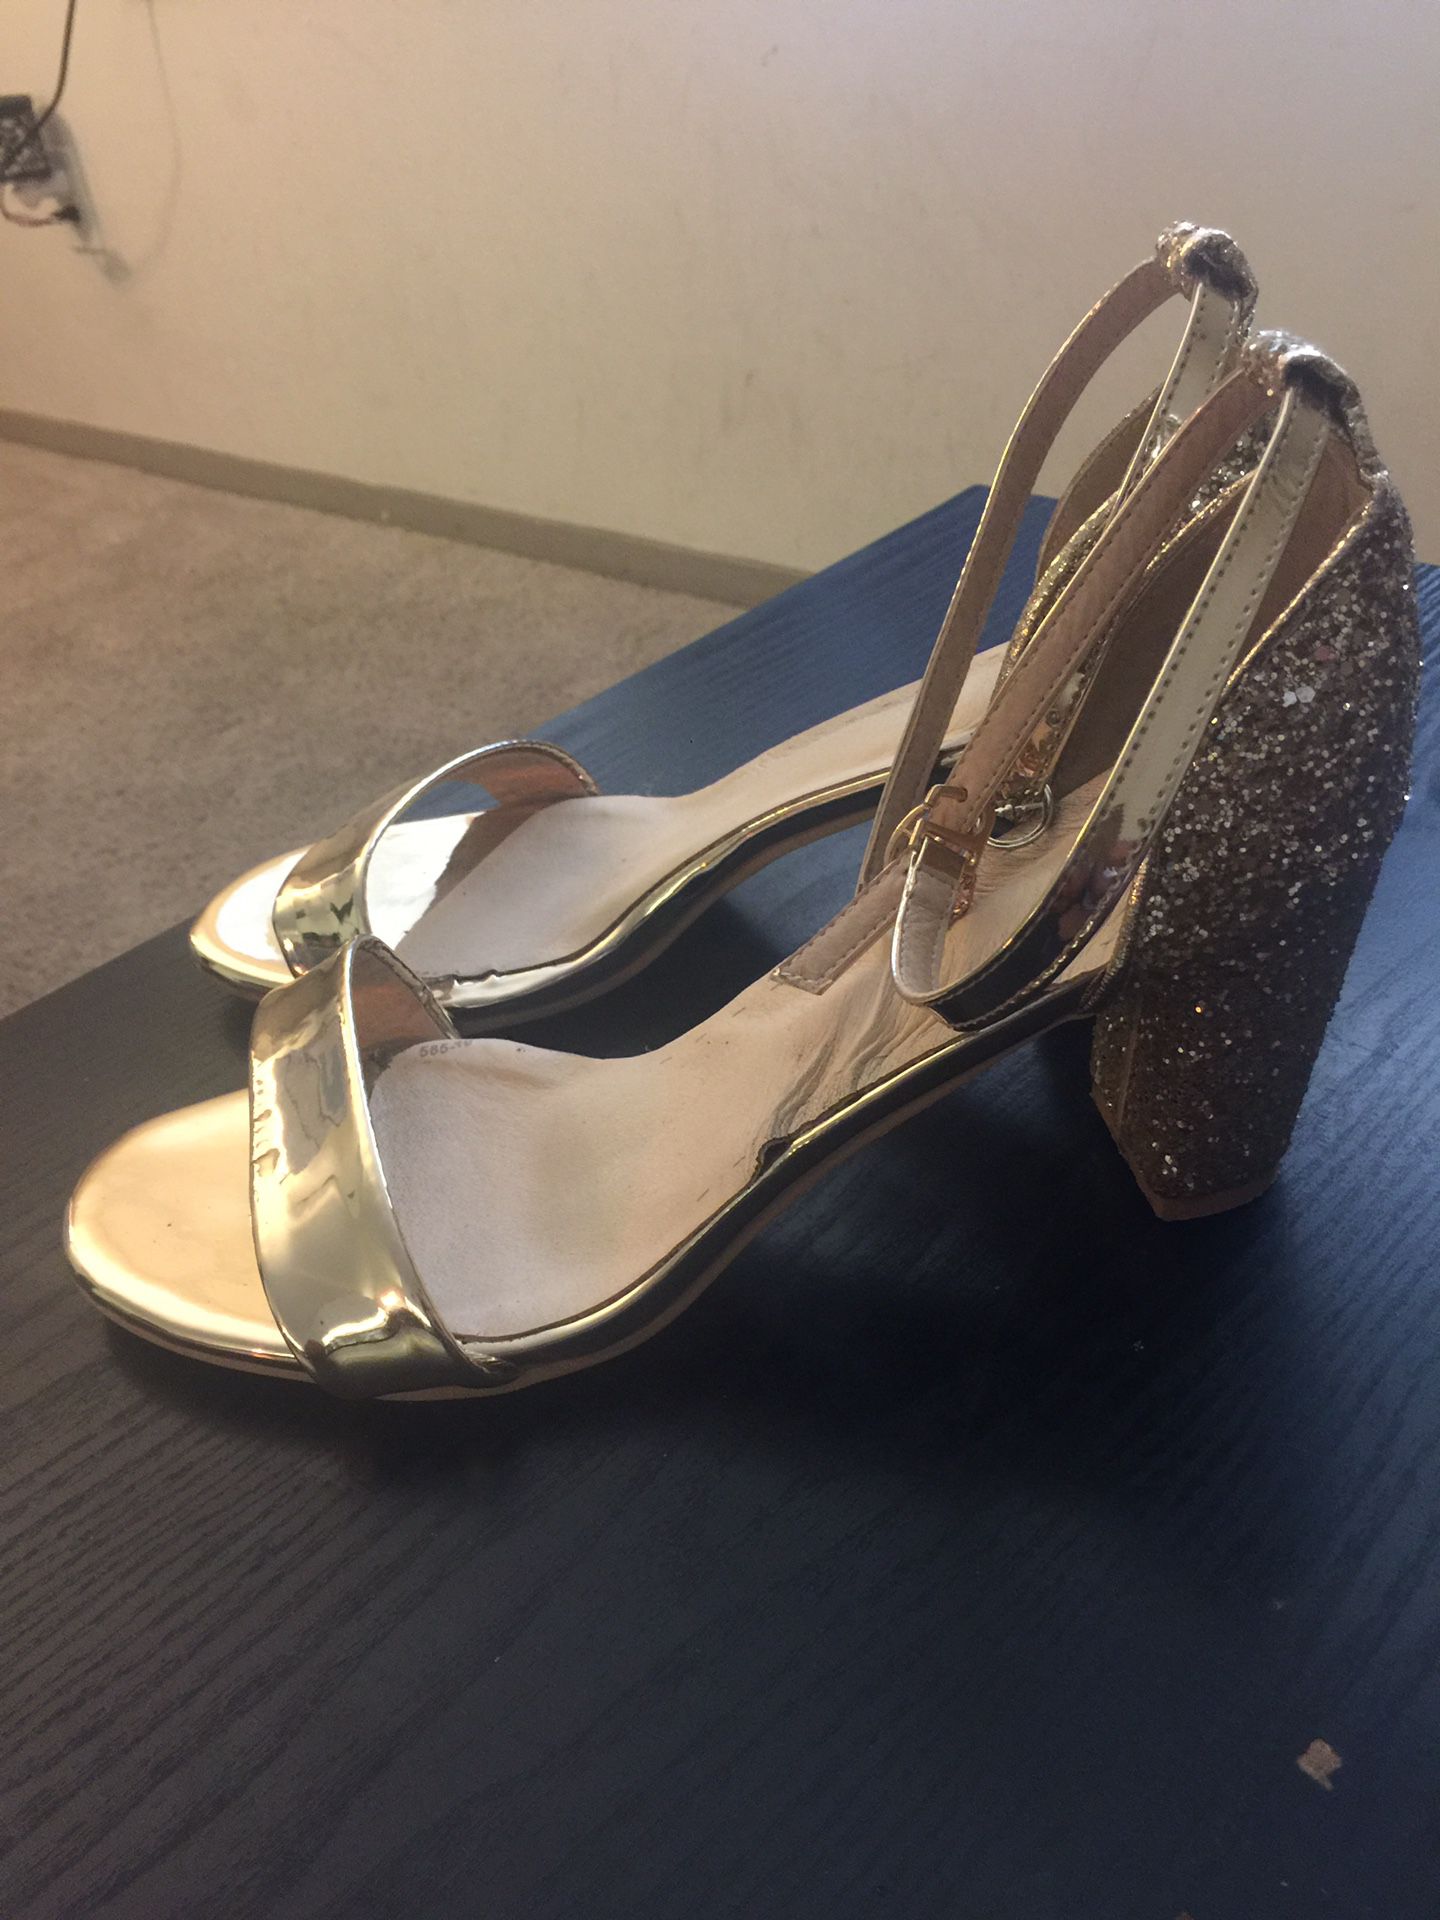 DecoStain Womens Glitter Sequin Pumps Shoe bc s Ankle Strap Block Heel Party Wedding Dress Sandals